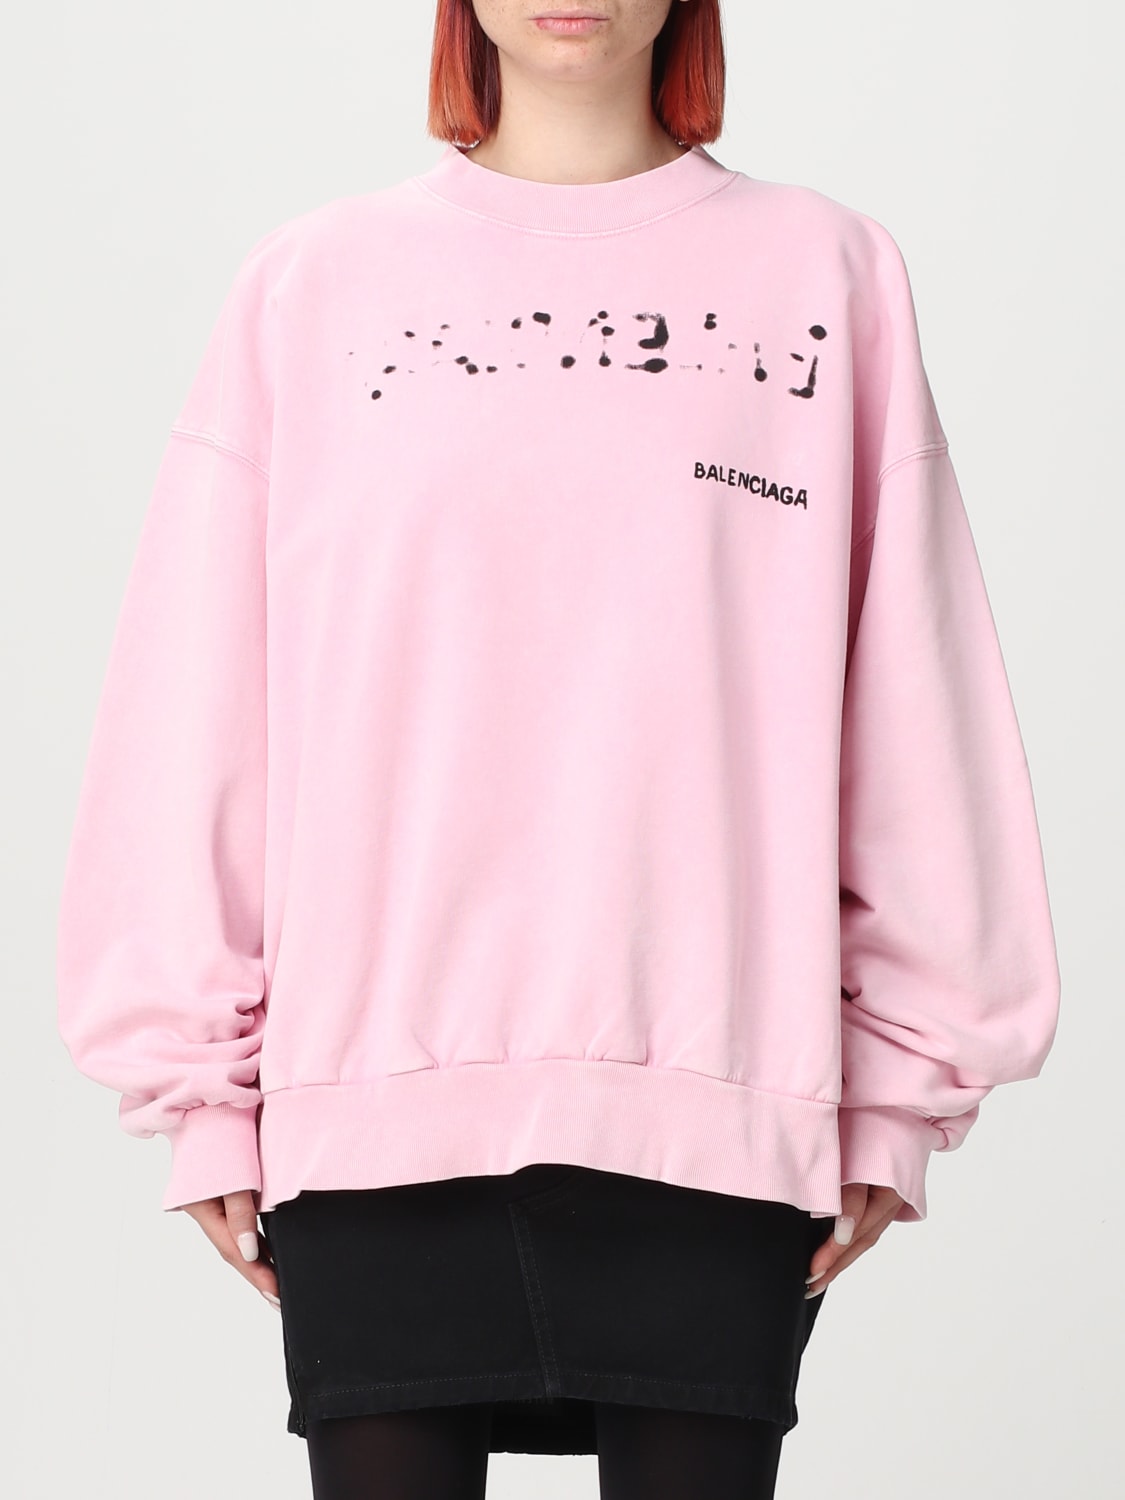 pålægge Nervesammenbrud Sparsommelig BALENCIAGA: sweatshirt for women - Pink | Balenciaga sweatshirt 697869TOVO6  online at GIGLIO.COM